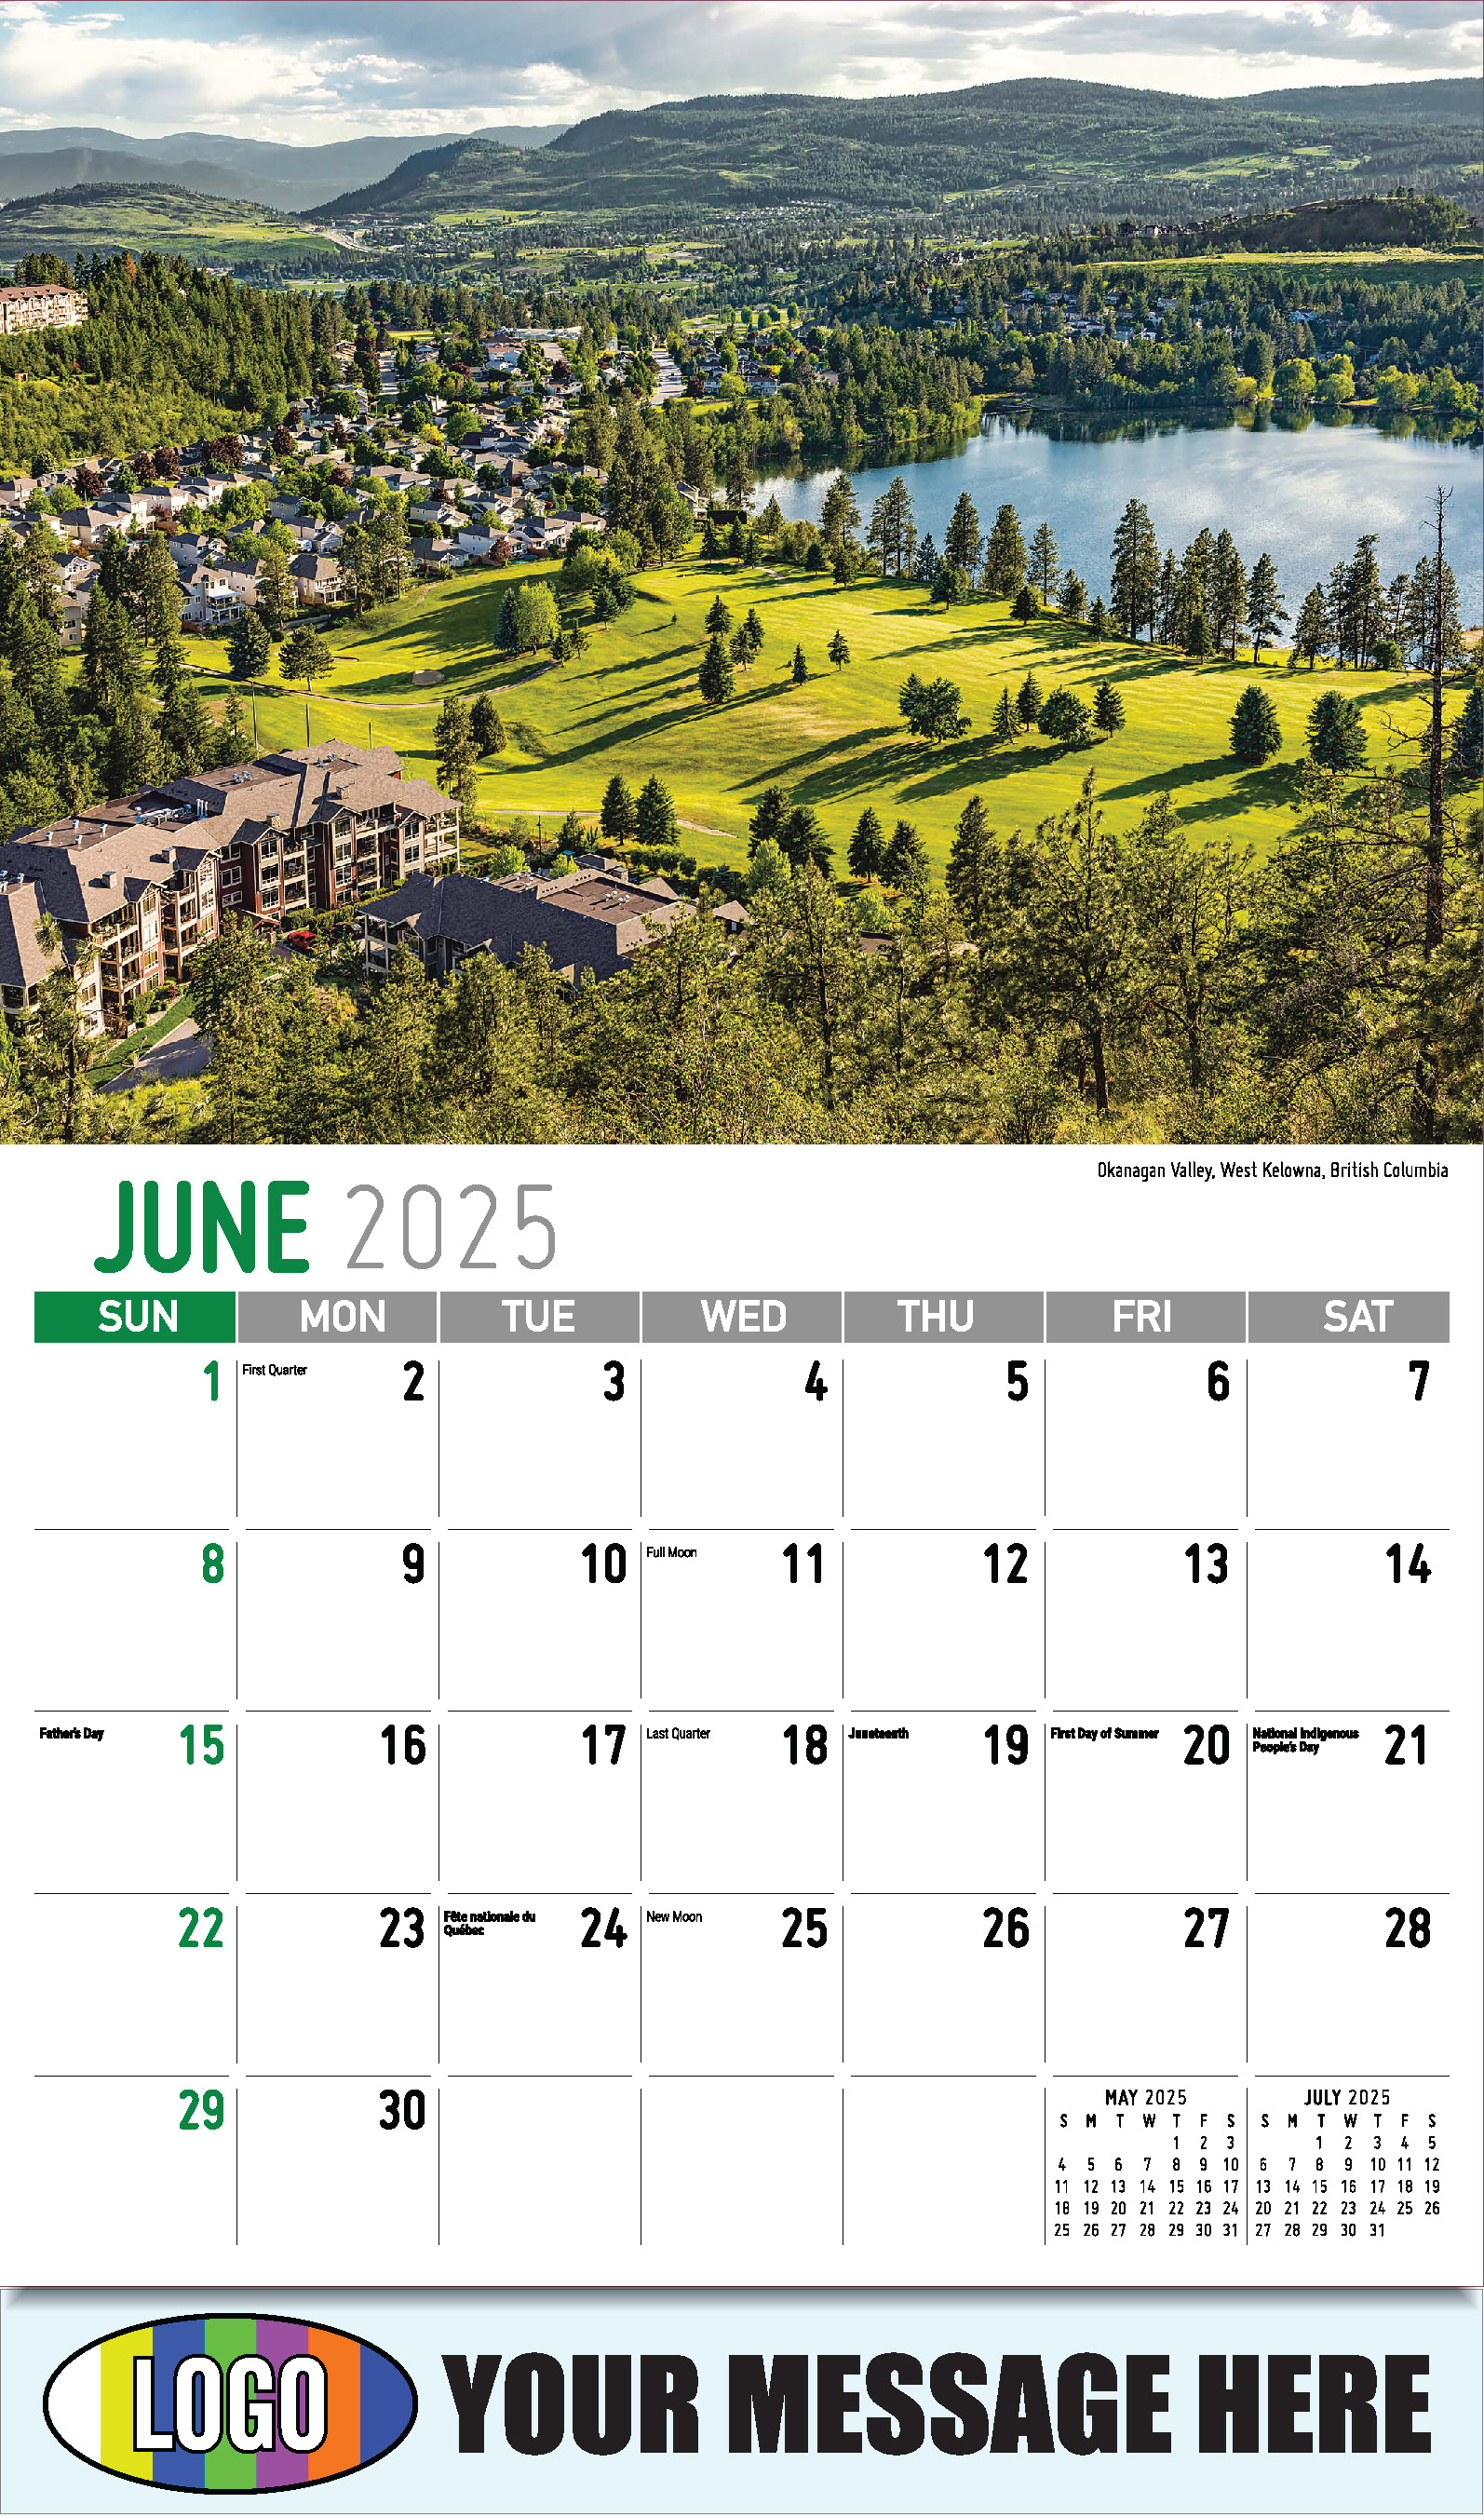 Scenes of Western Canada 2025 Business Promotional Wall Calendar - June